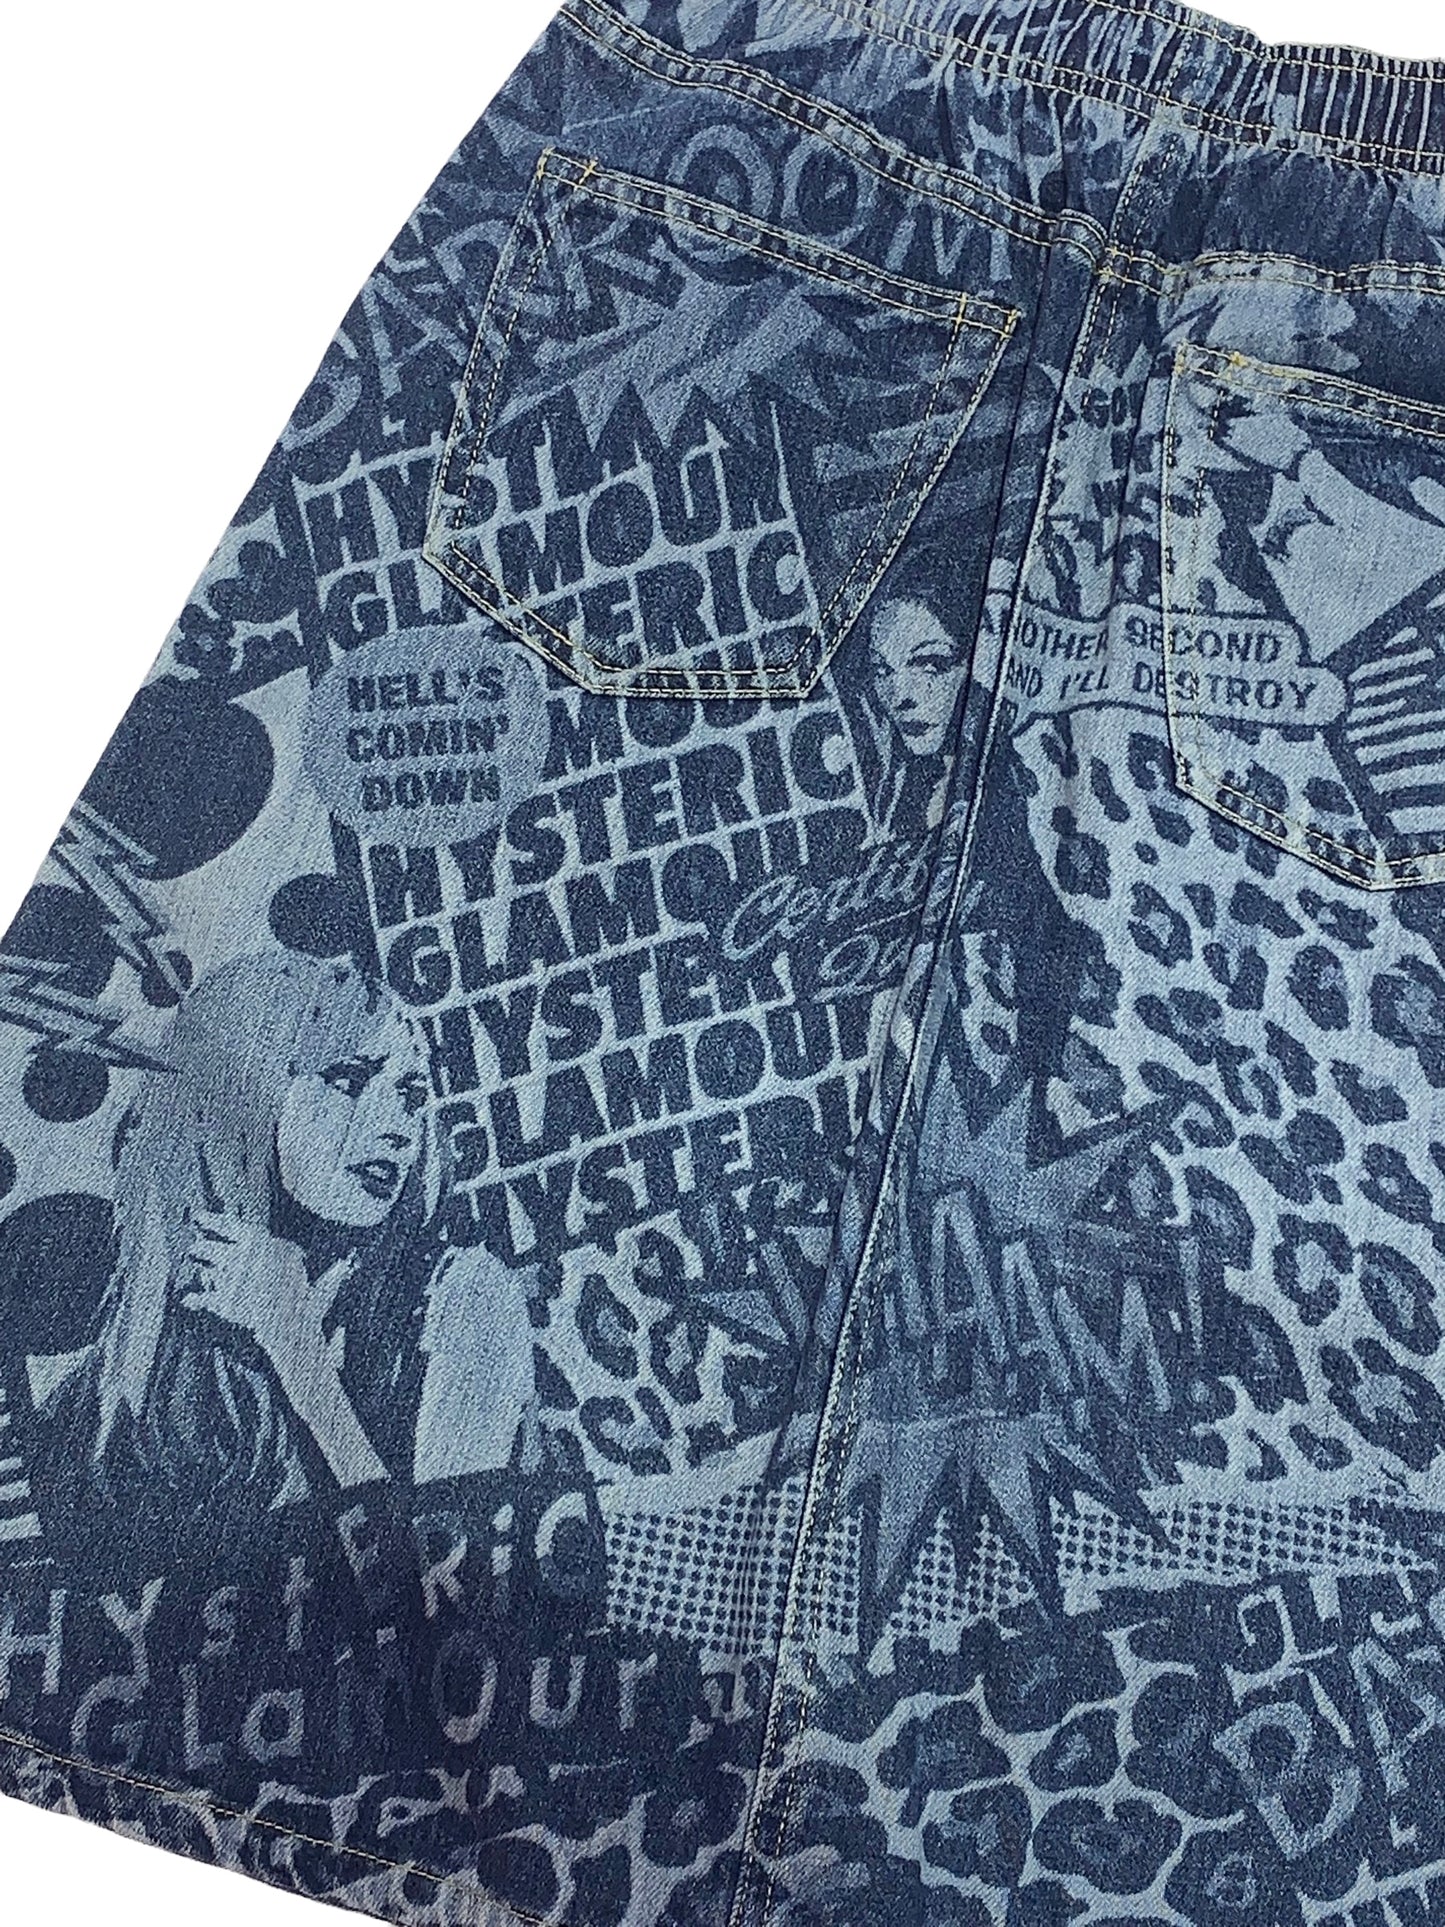 Vintage Hysteric Glamour Leopard print Denim Skirt